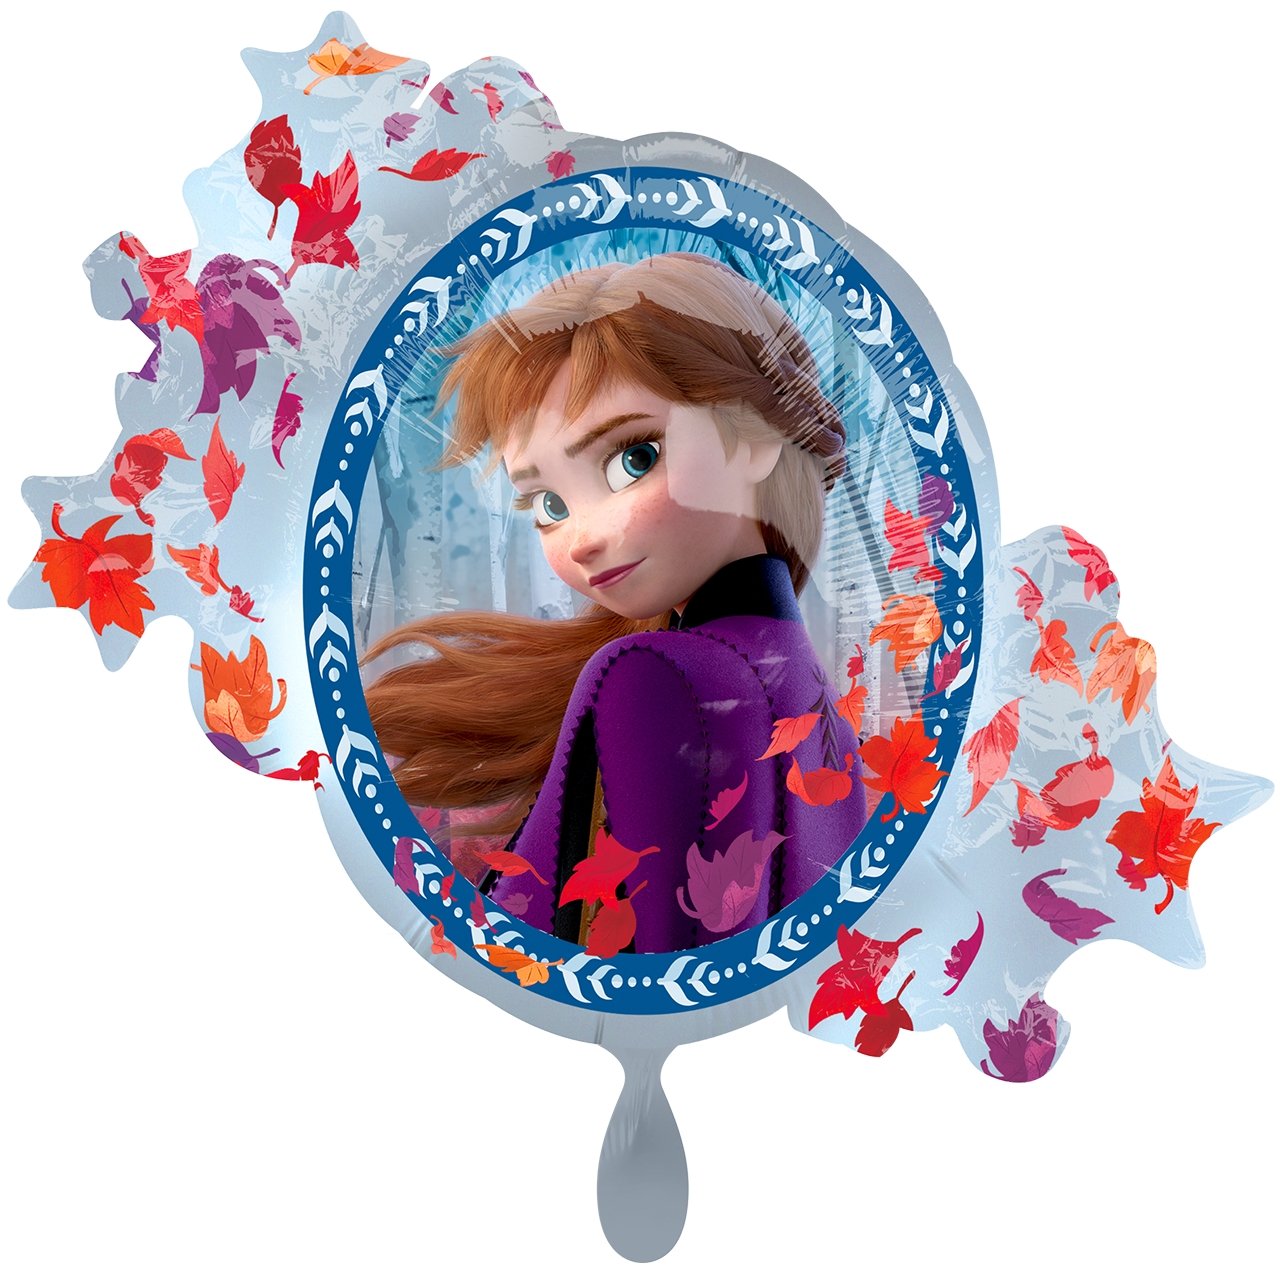 XXL Folienballon "Frozen 2 - Anna und Elsa" 76cm - Party im Karton